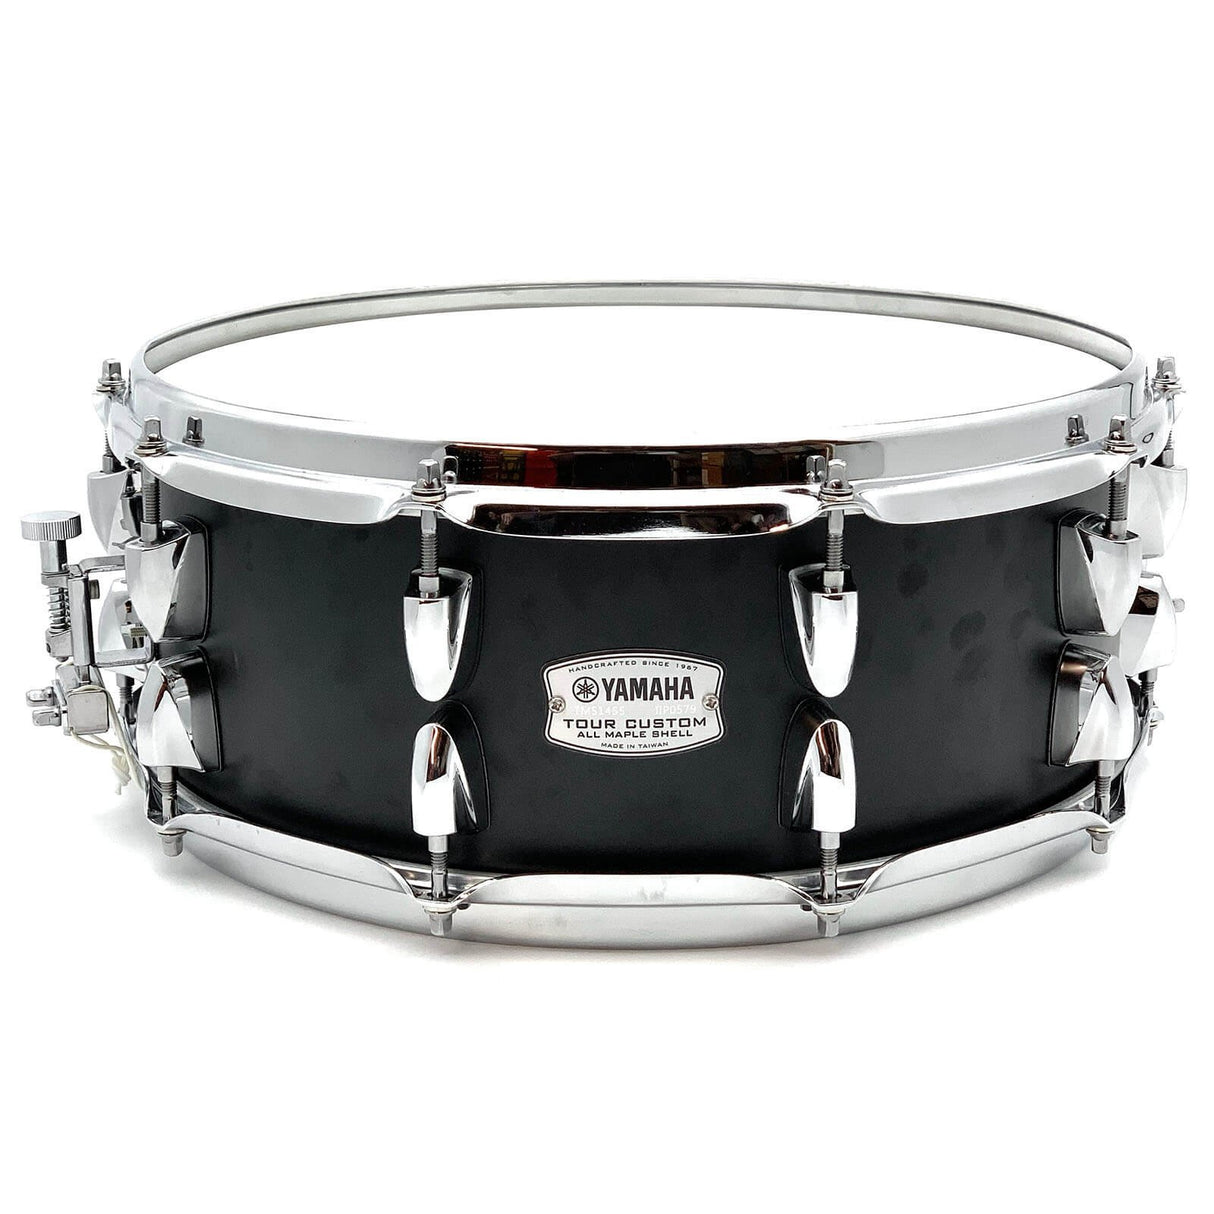 Yamaha B-STOCK Tour Custom Snare Drum 14x5.5 Licorice Satin